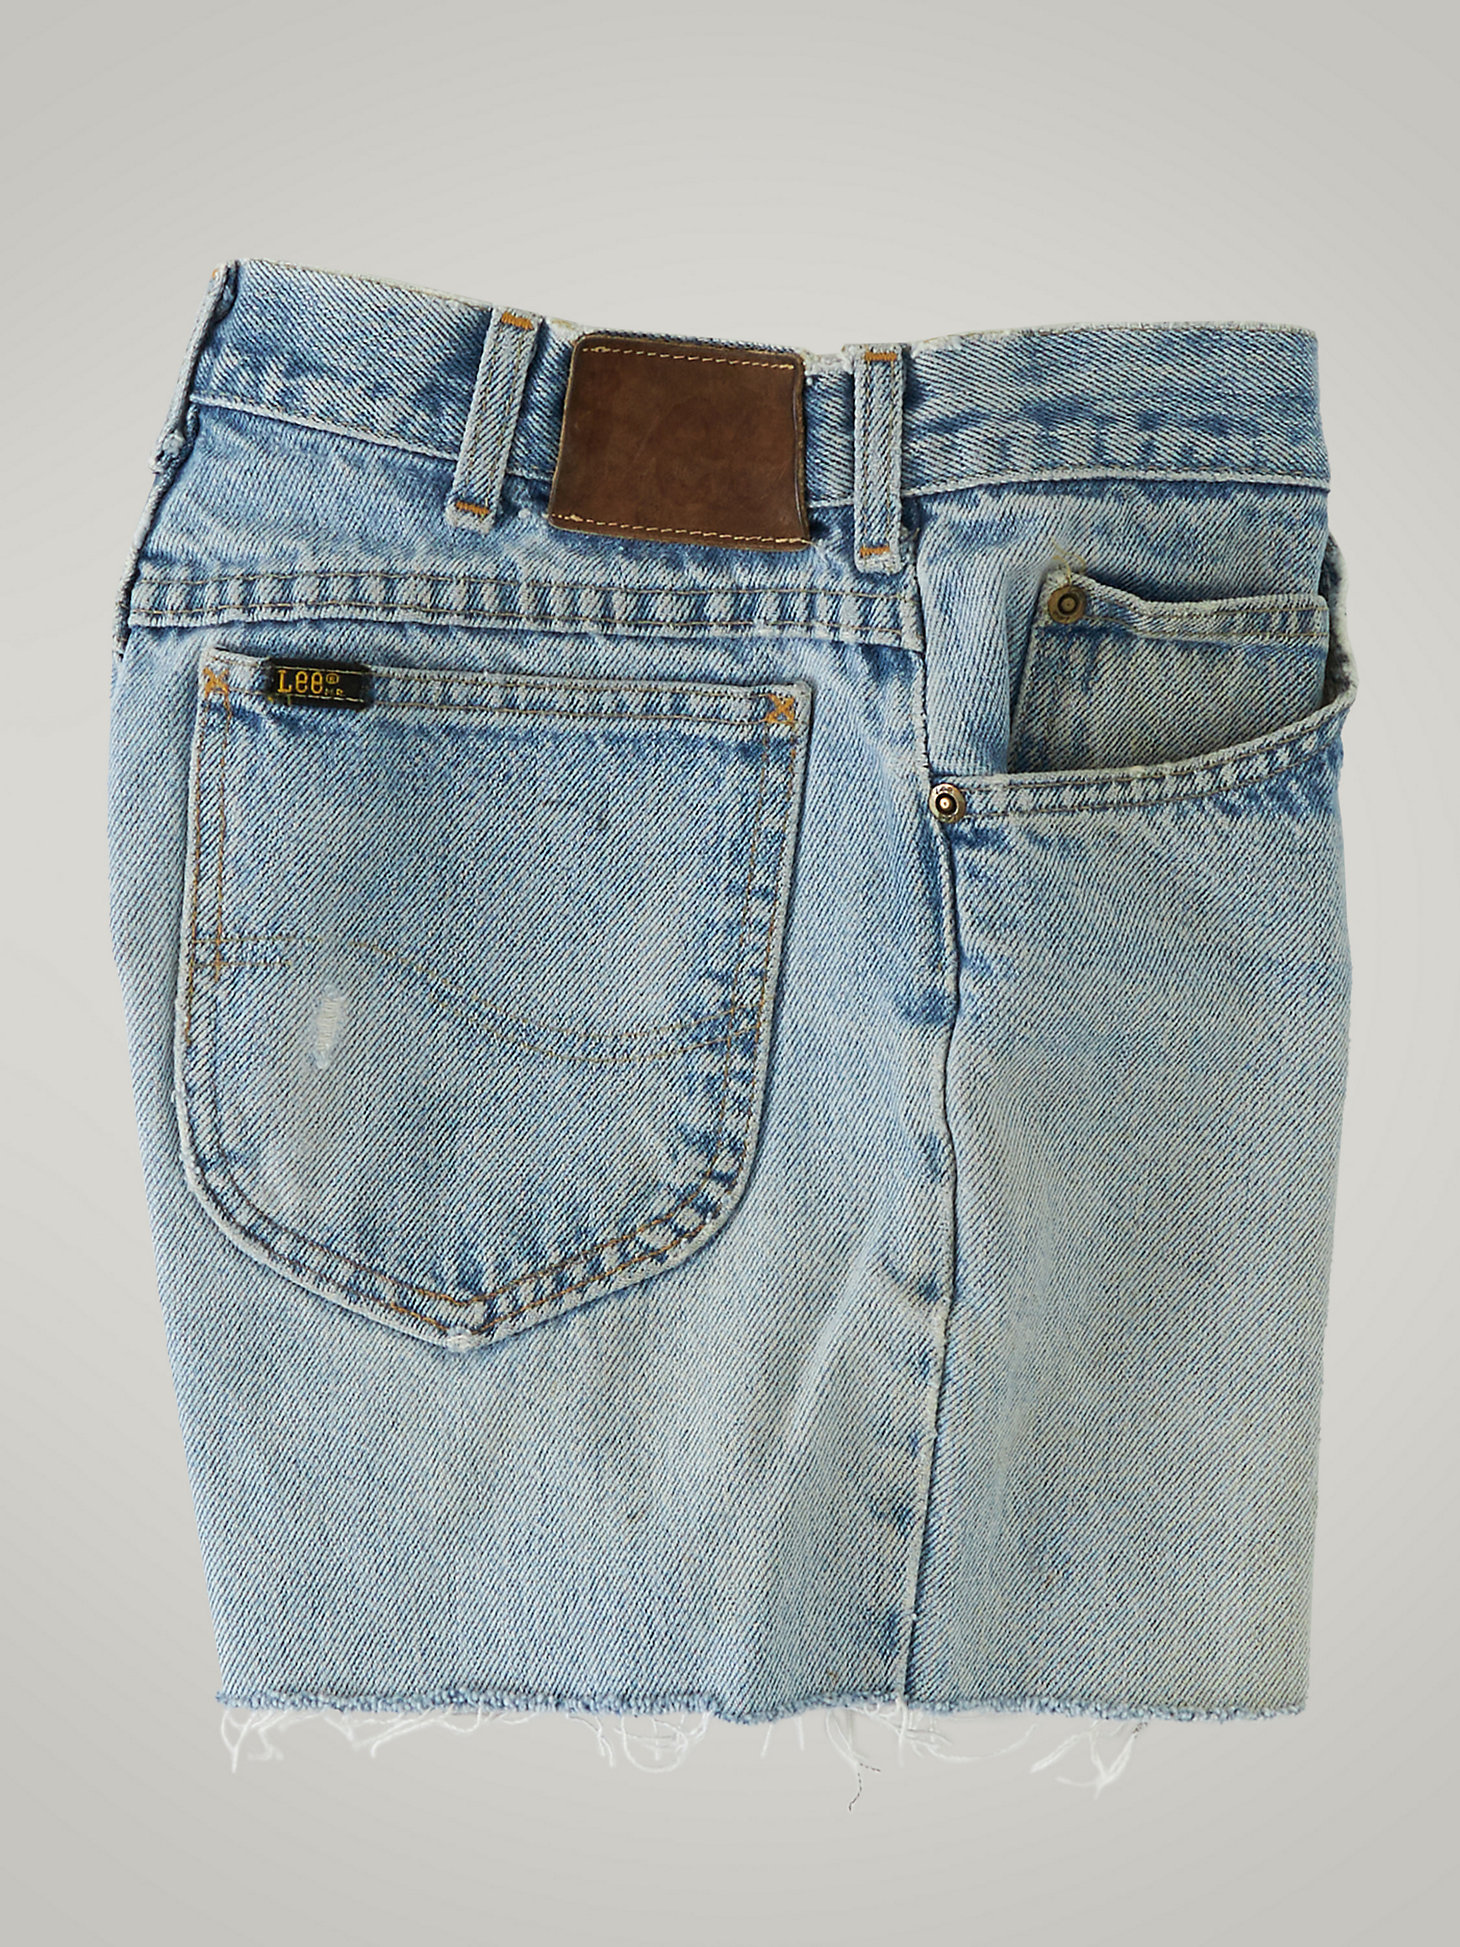 Women's Vintage Cut-Off Shorts WS19 (Size 30) in Light Denm alternative view 2